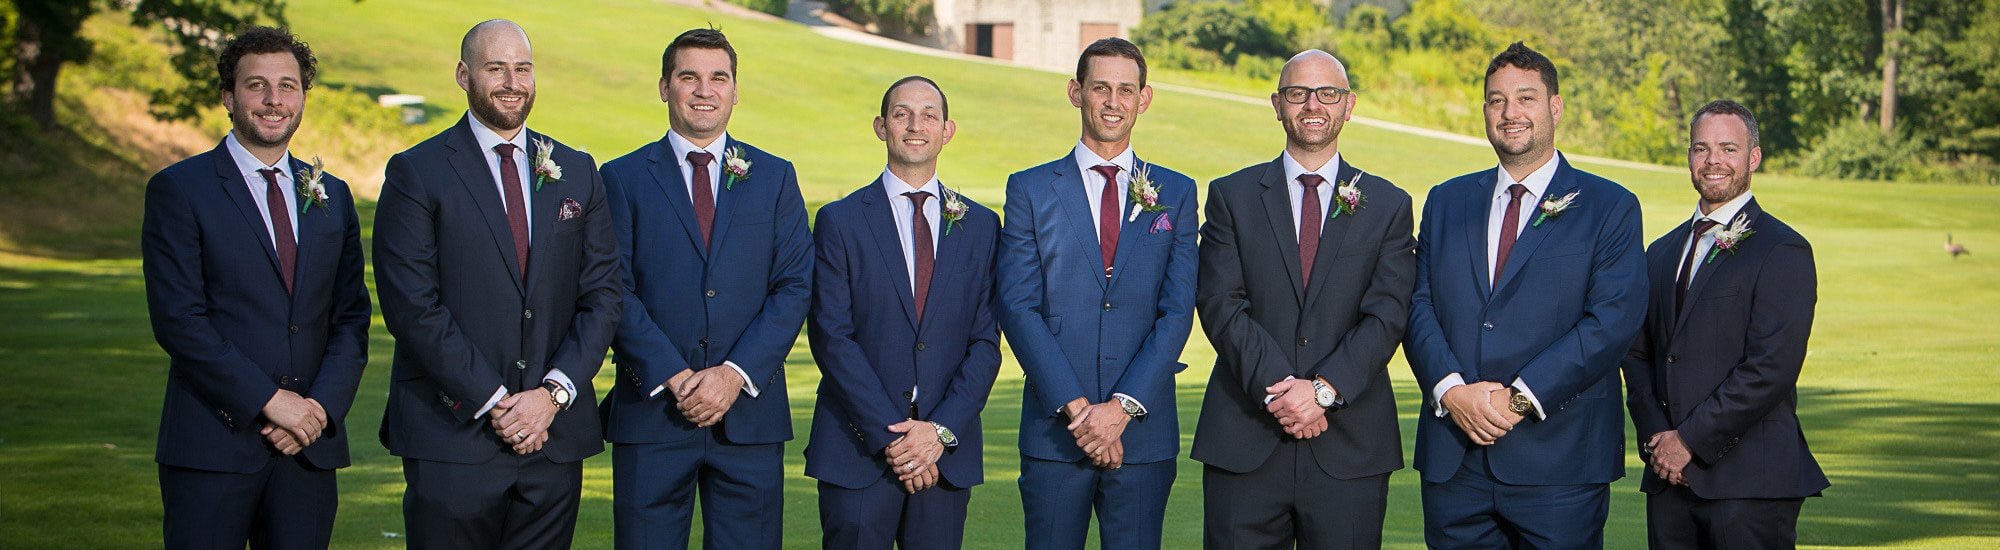 groomsmen wearing custom suits by j&a custom clothing at a wedding